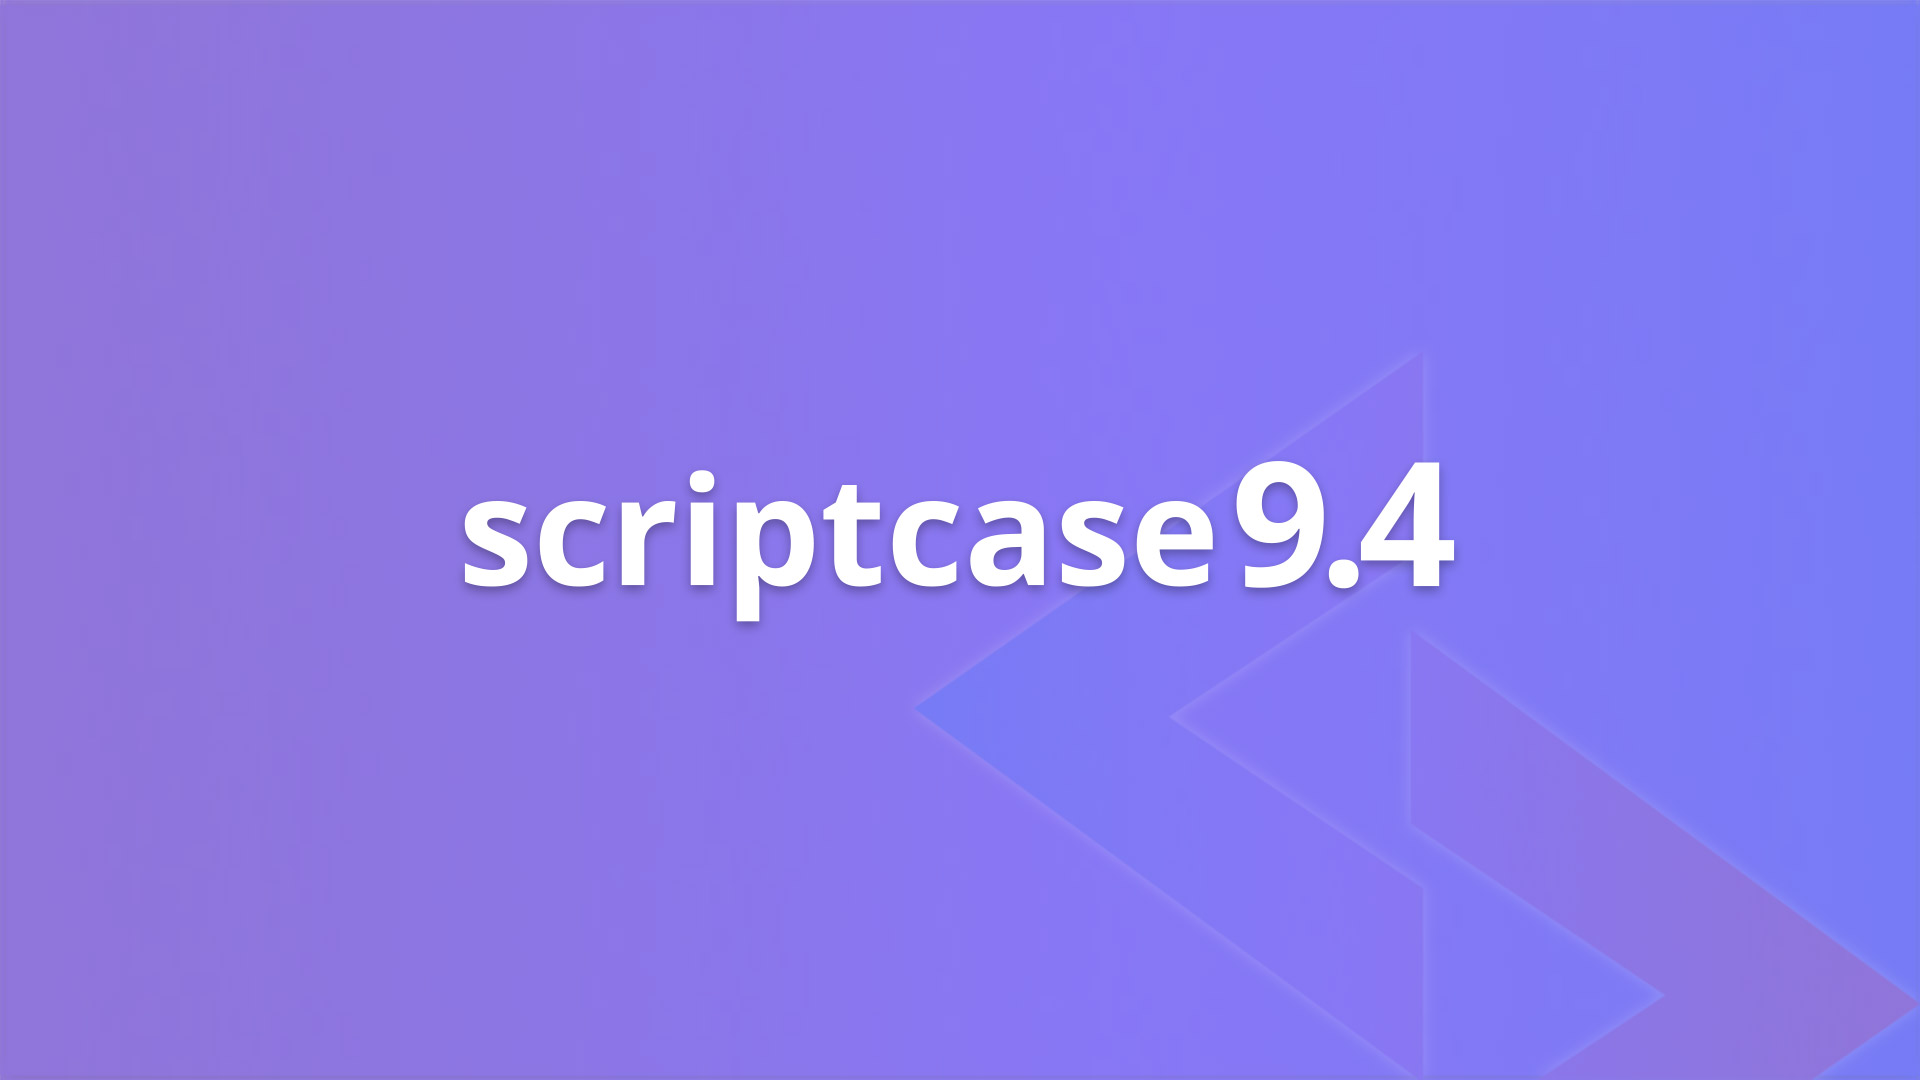 scriptcase 9.4